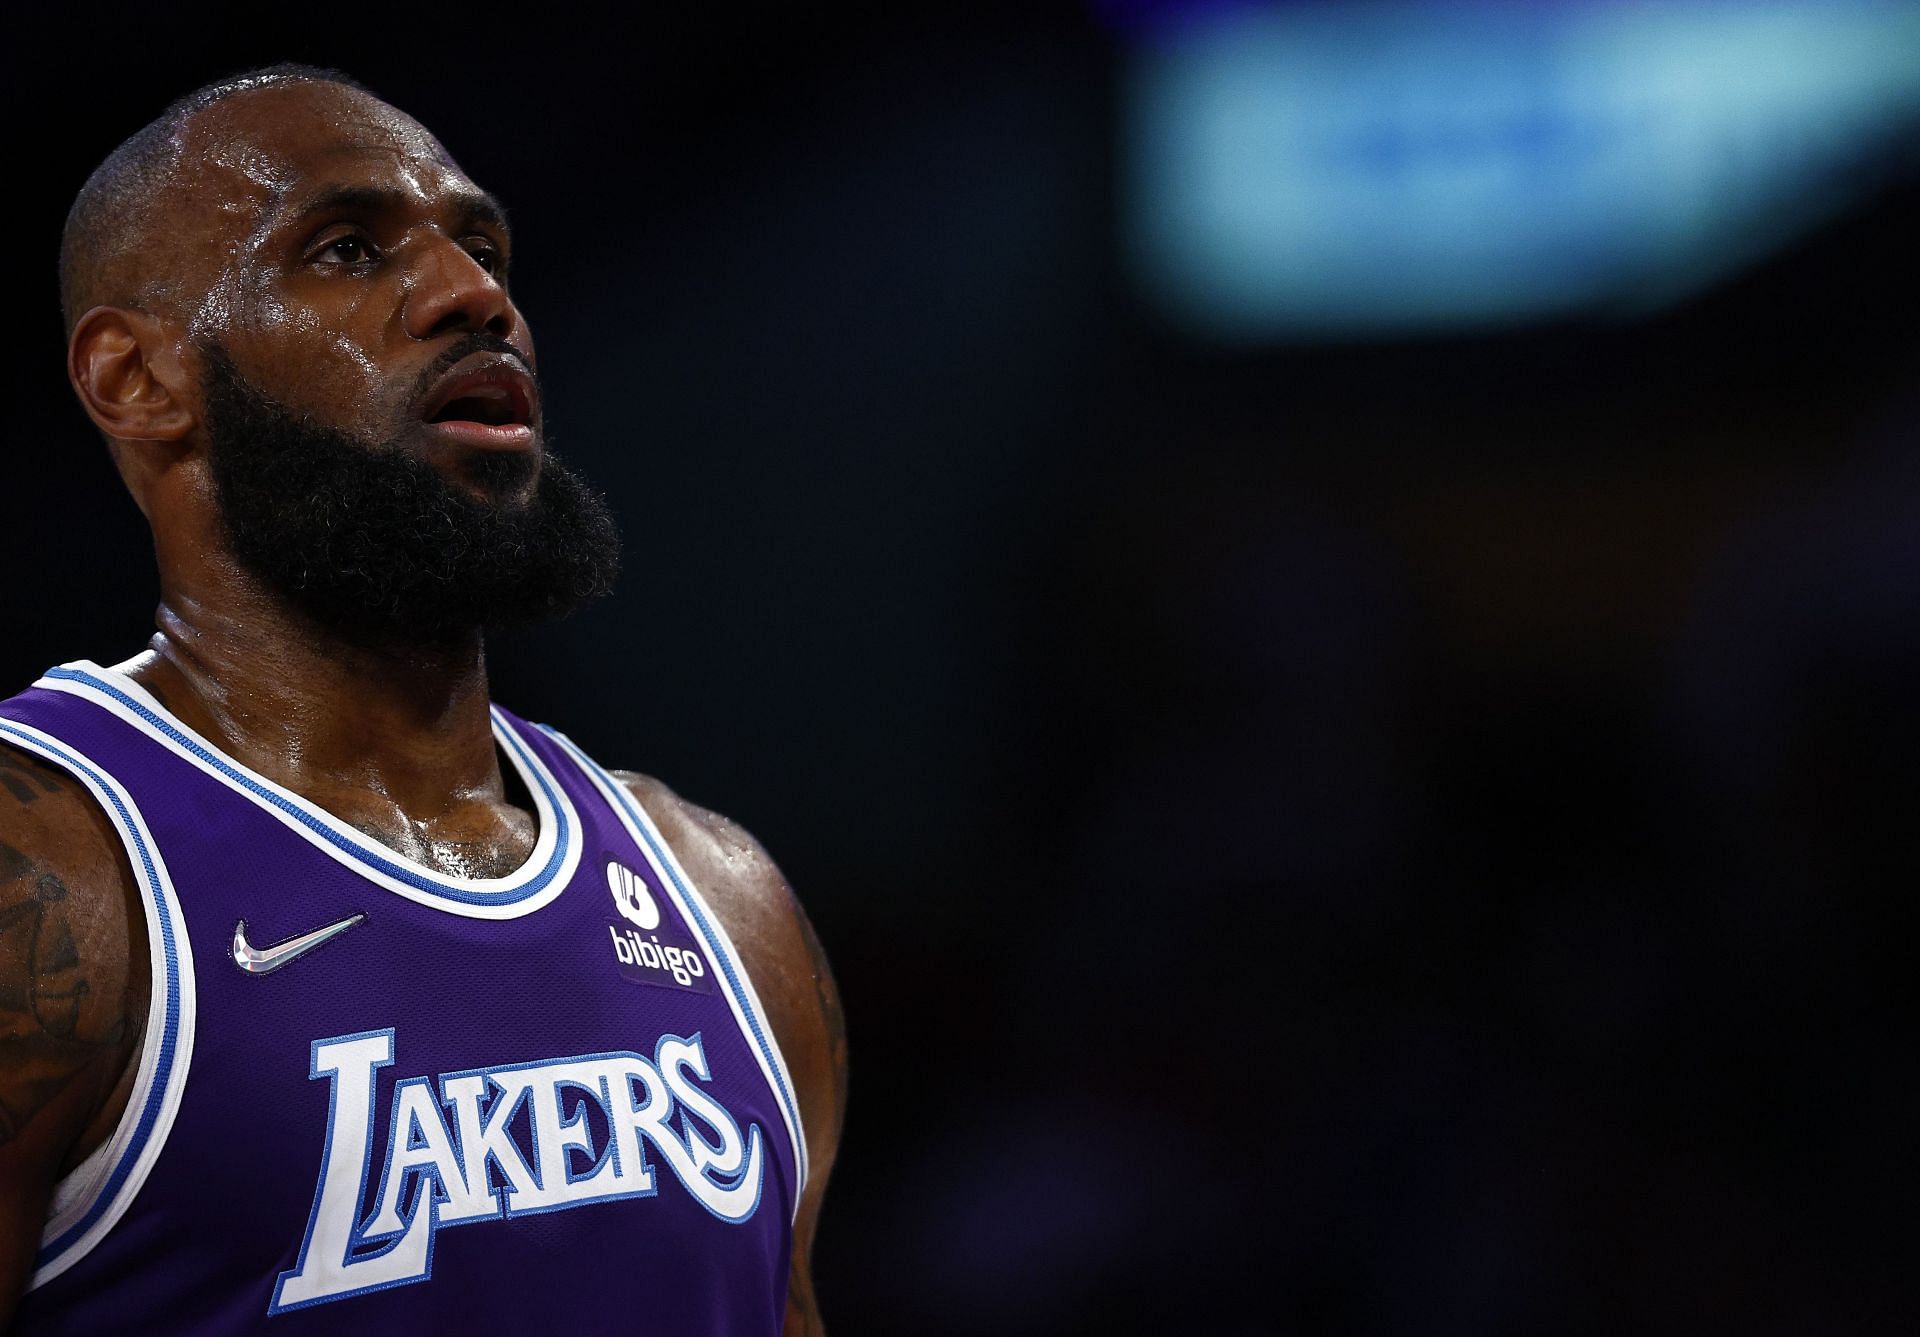 LA Lakers forward LeBron James is entering his 20th season.